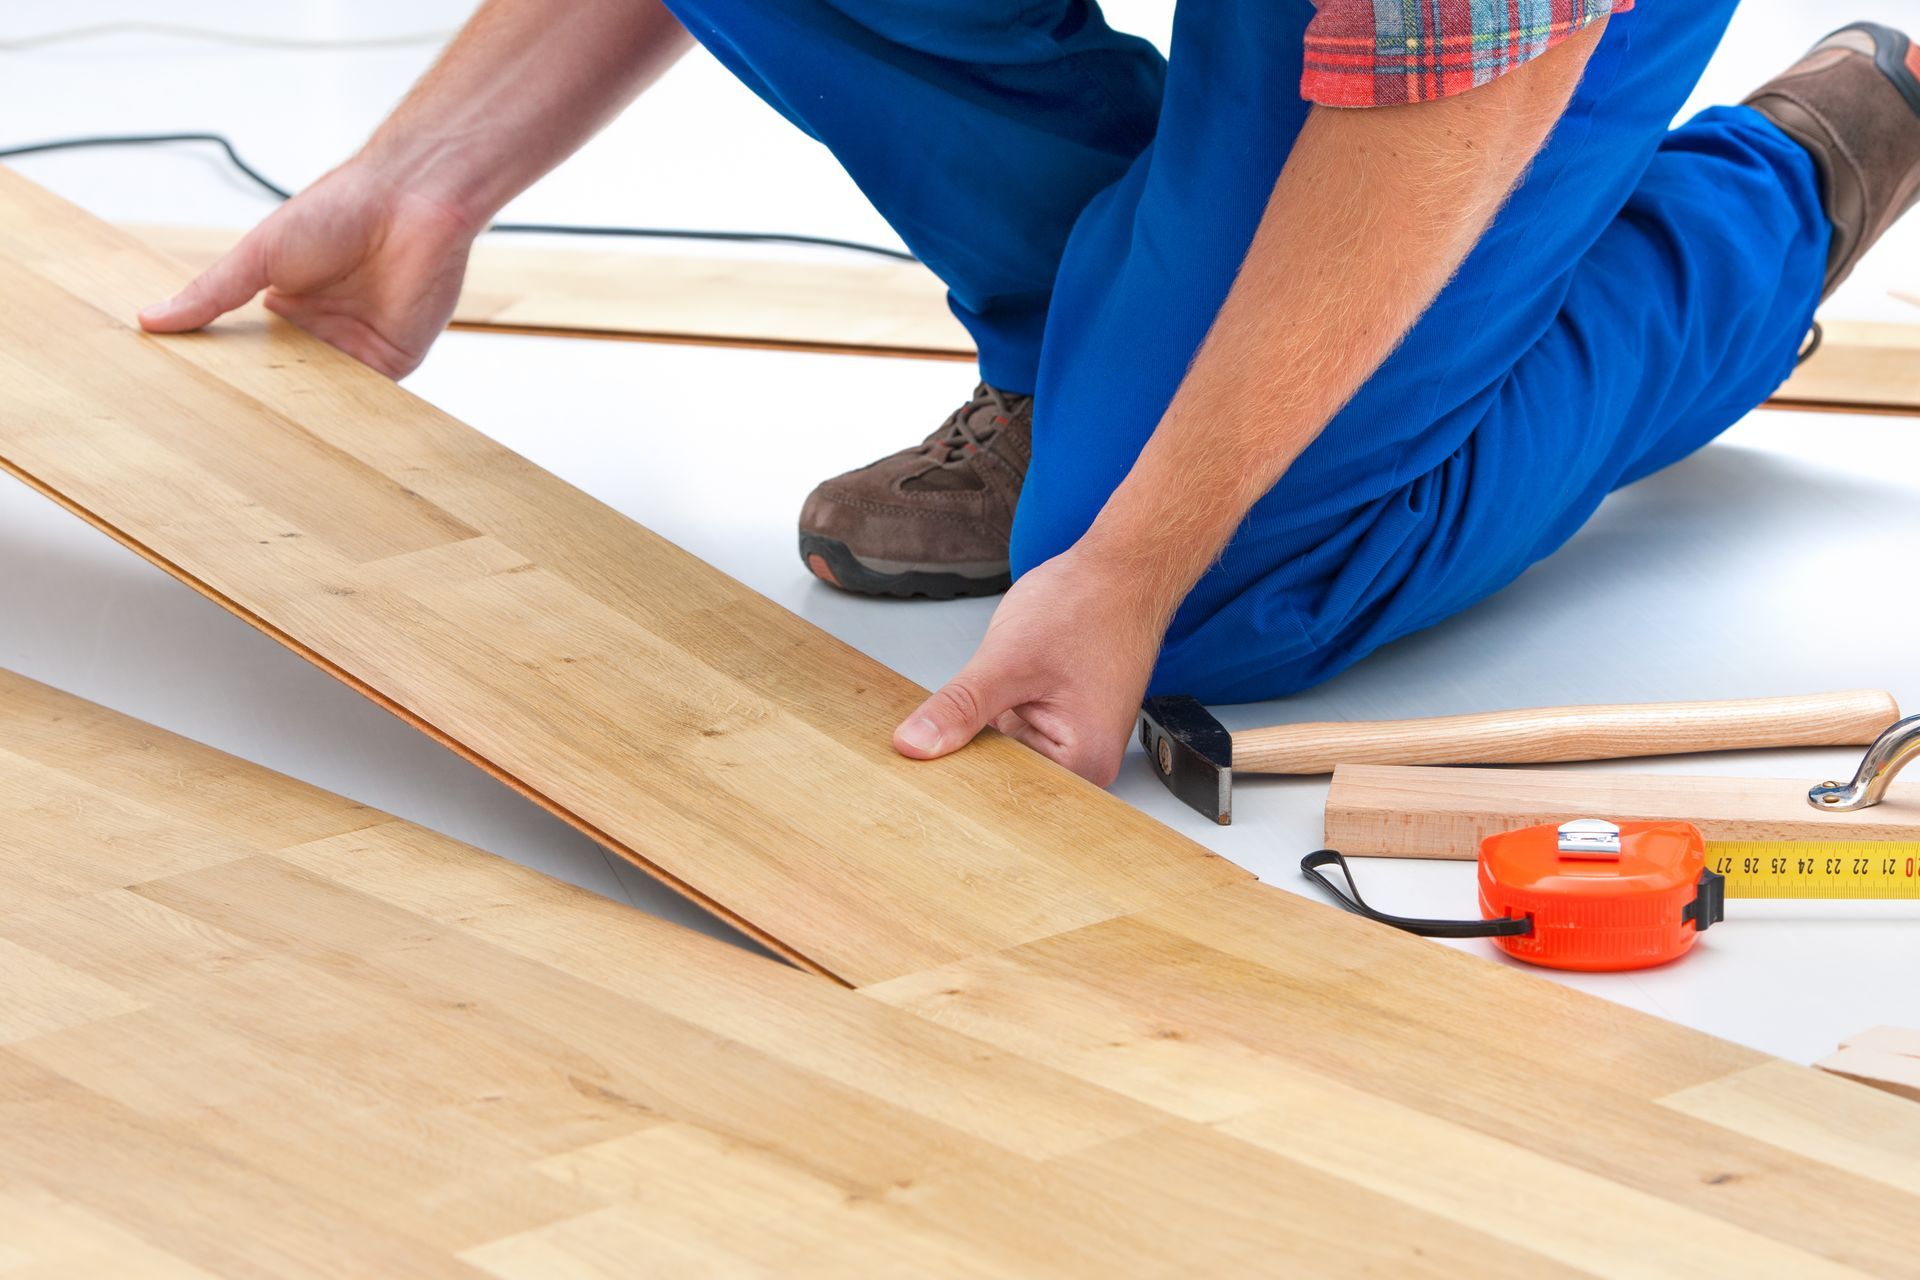 Professional handyman installing laminate flooring in a room.